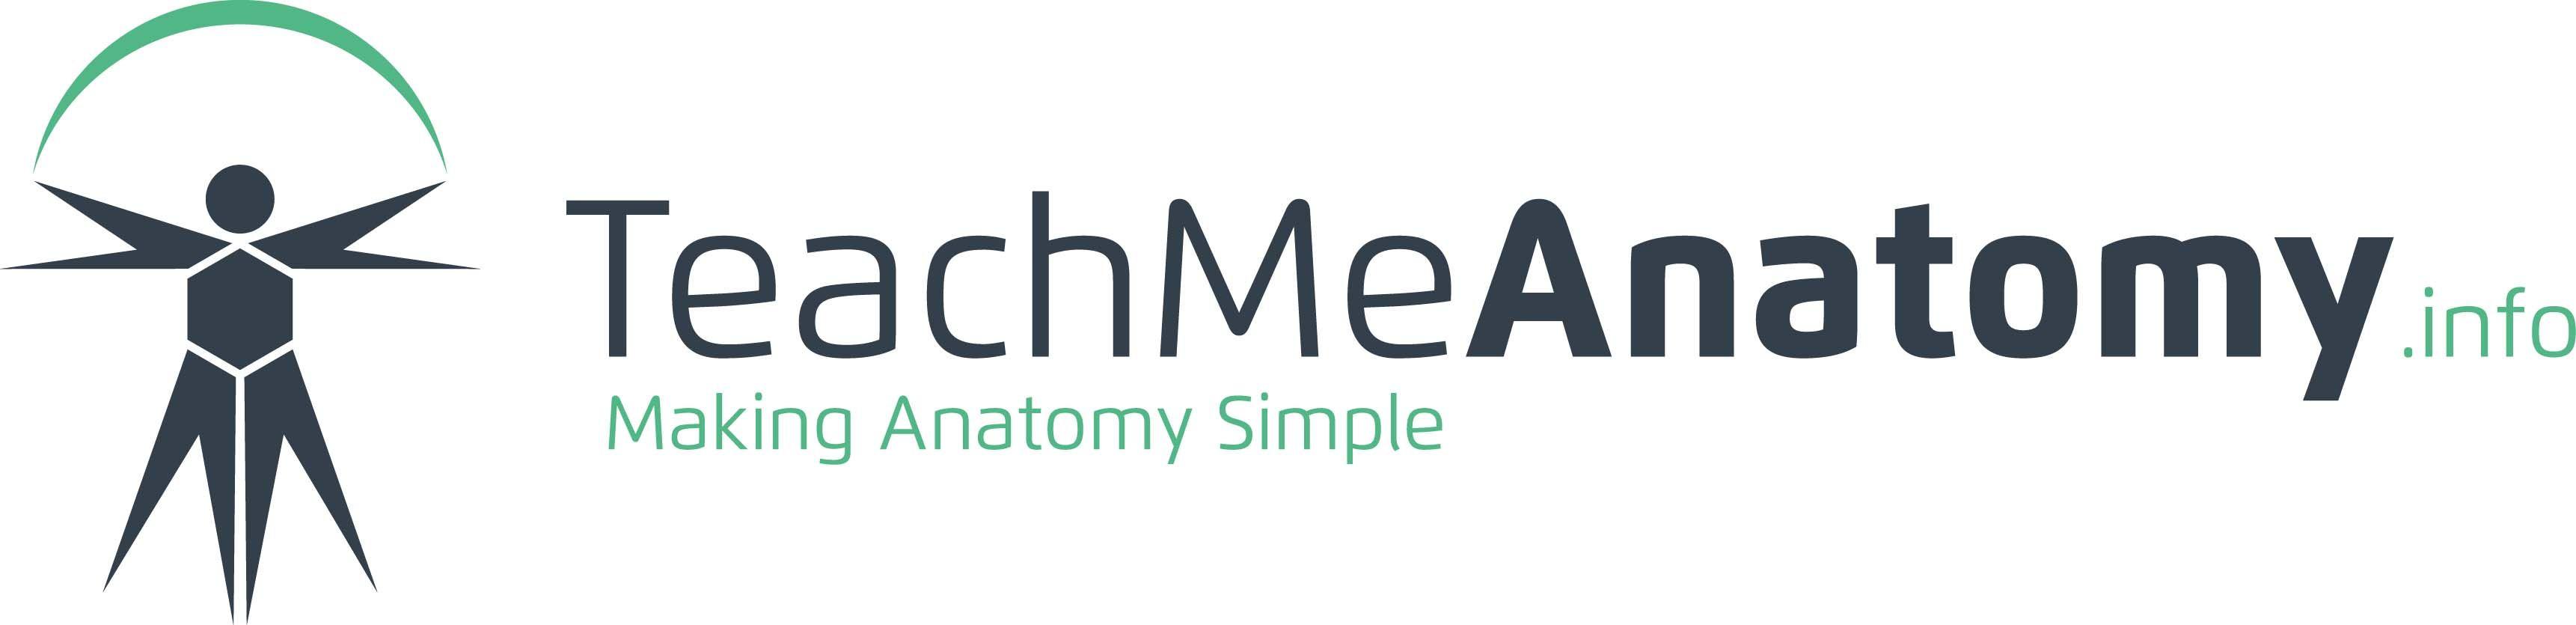 Anatomical Logo - TeachMeAnatomy Anatomy Simple